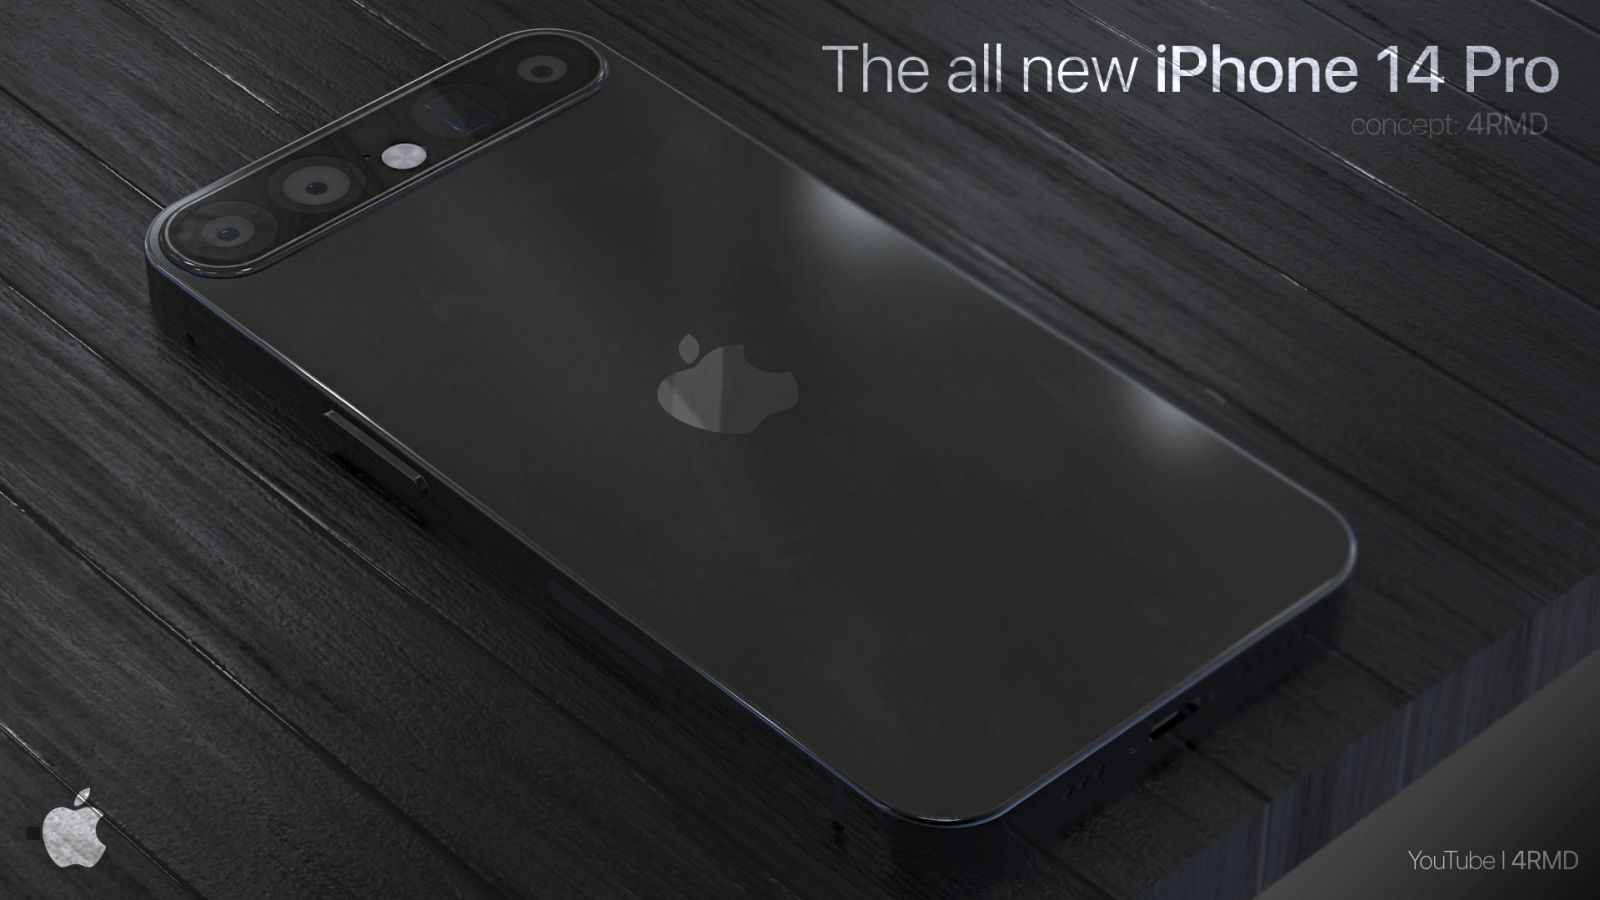 Apple-iPhone-14-Pro-concept-4RMD-3